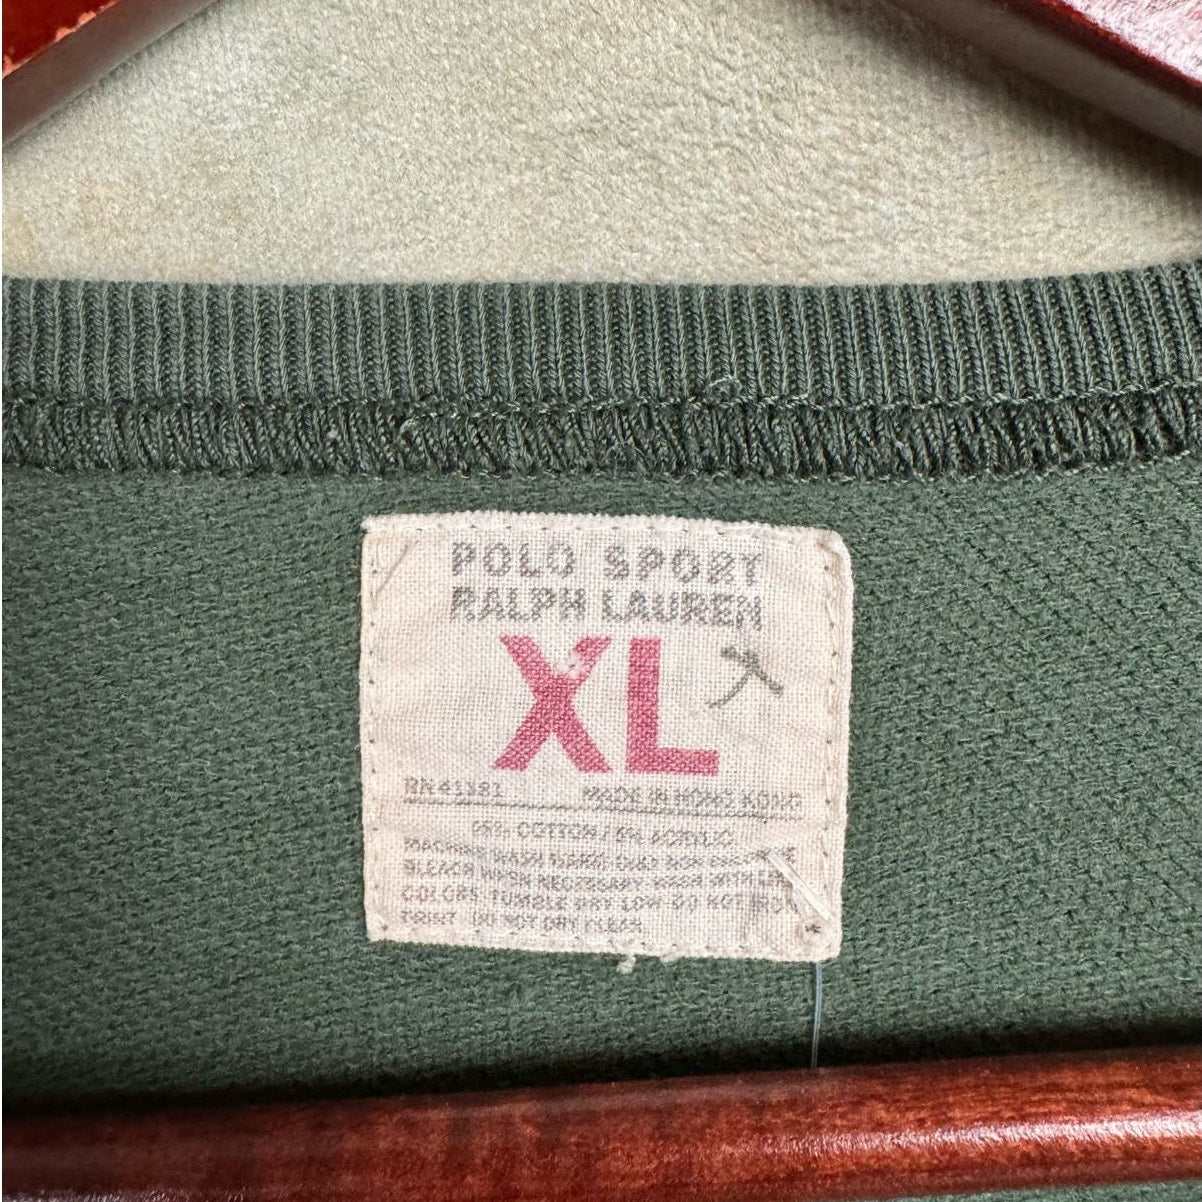 VTG 90s Polo Ralph Lauren Polo Sport Sweatshirt Sz XL